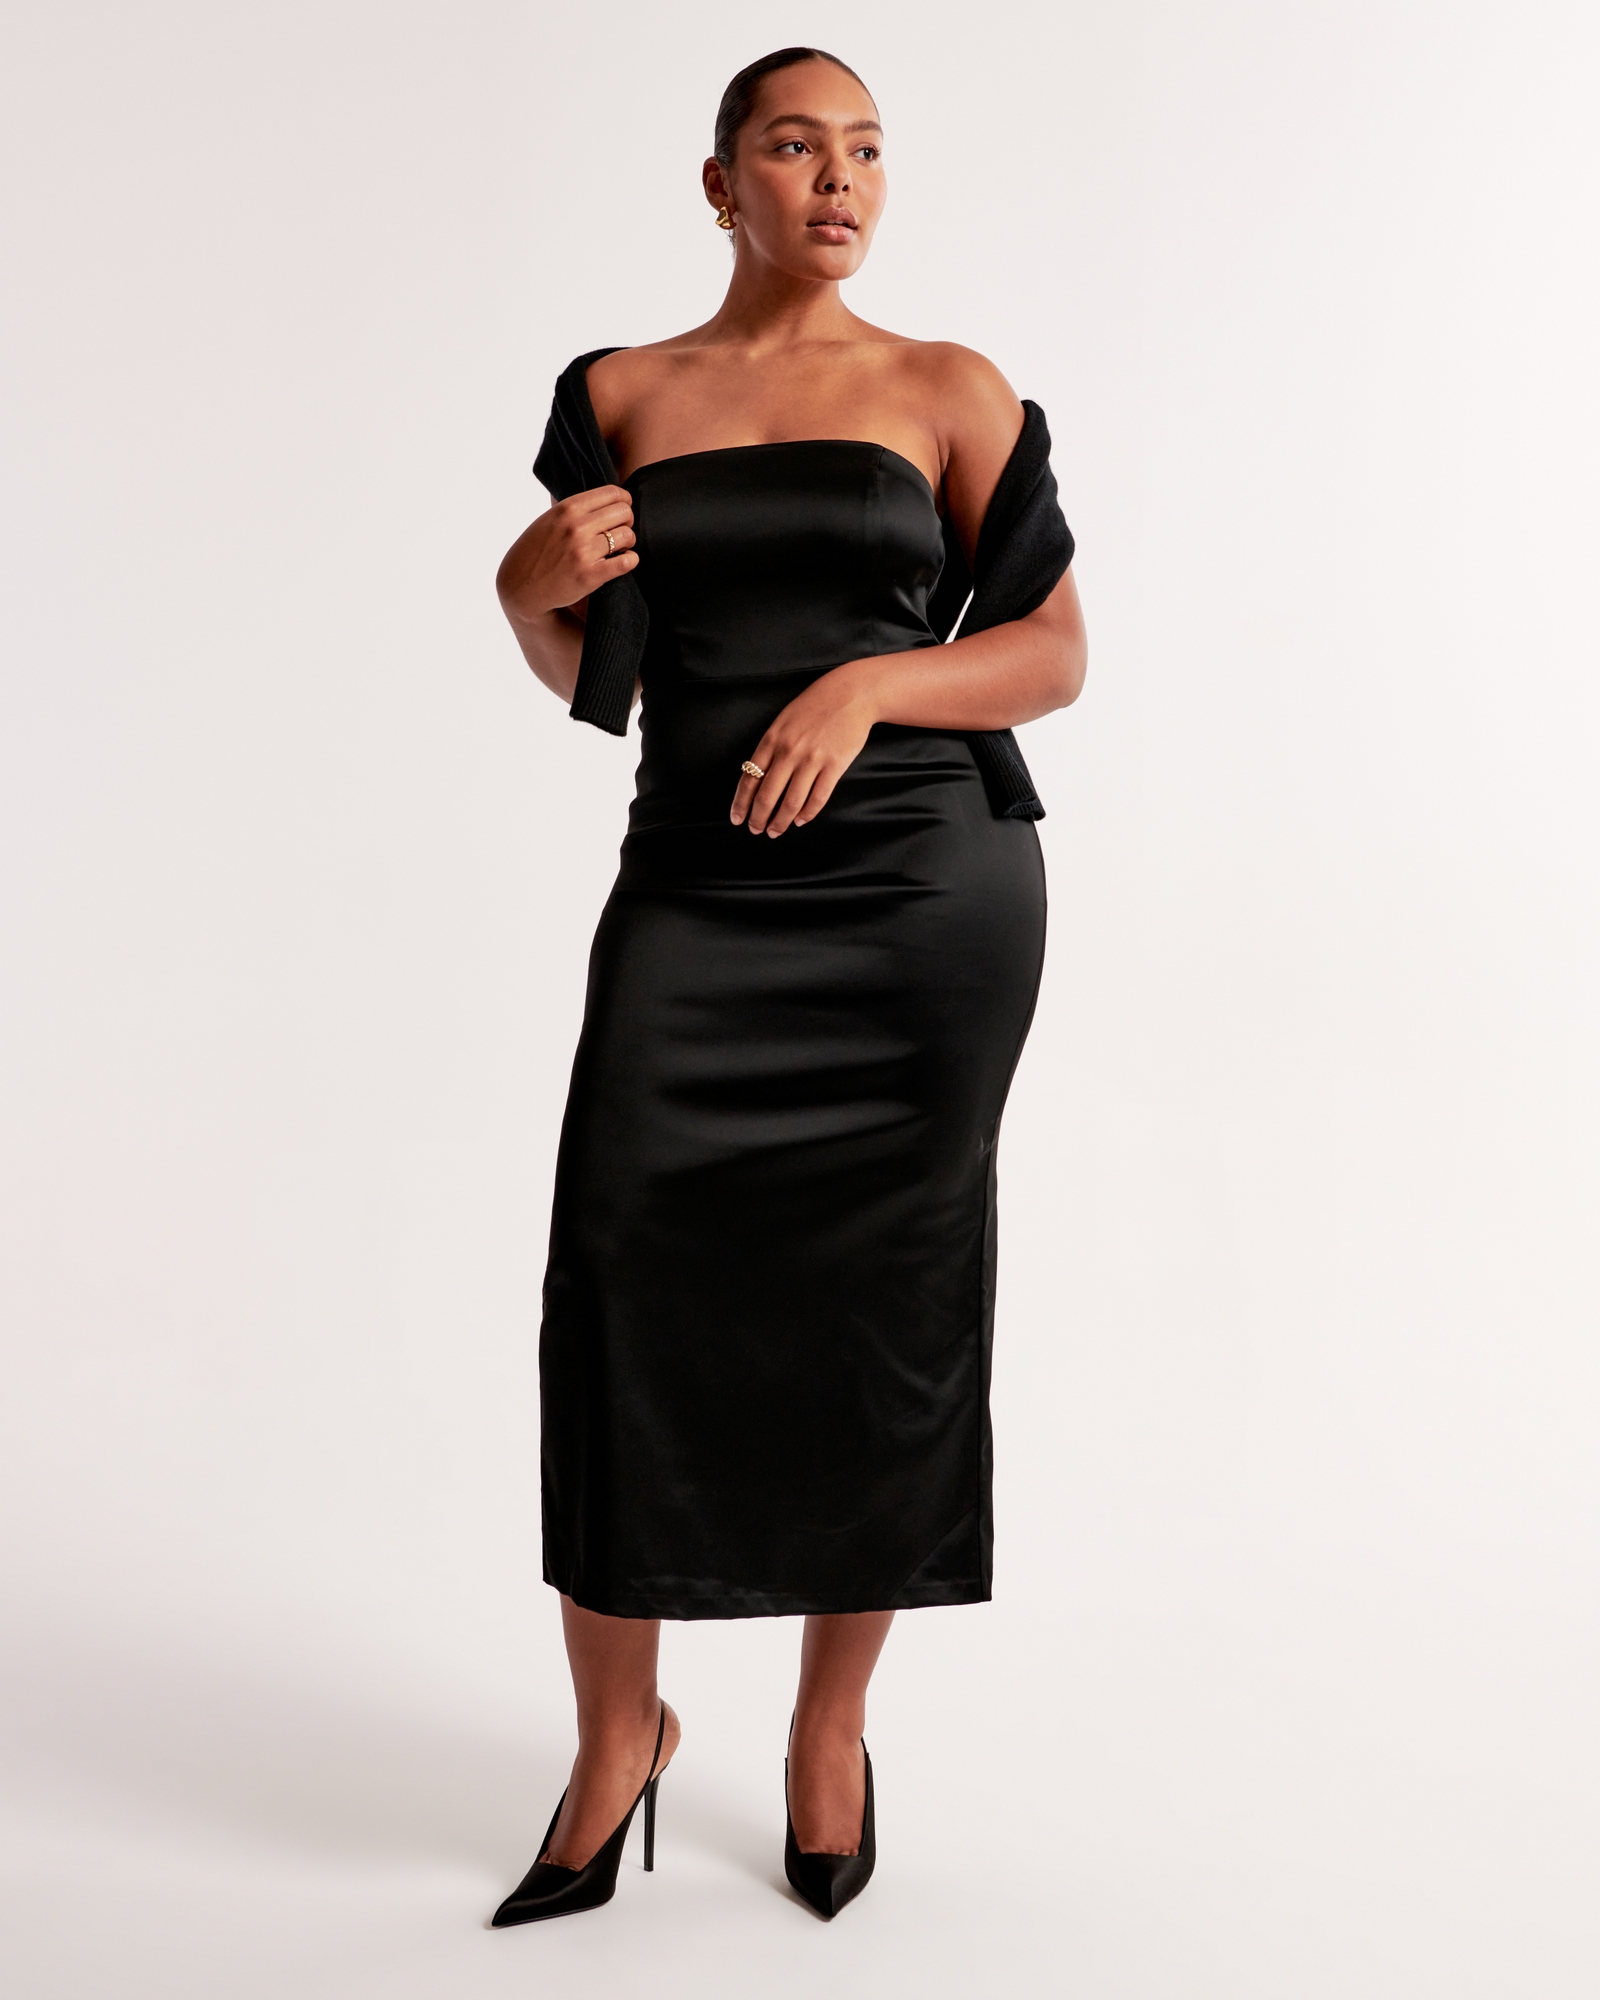 Blissfully Beautiful Black Satin Strapless Tiered Maxi Dress